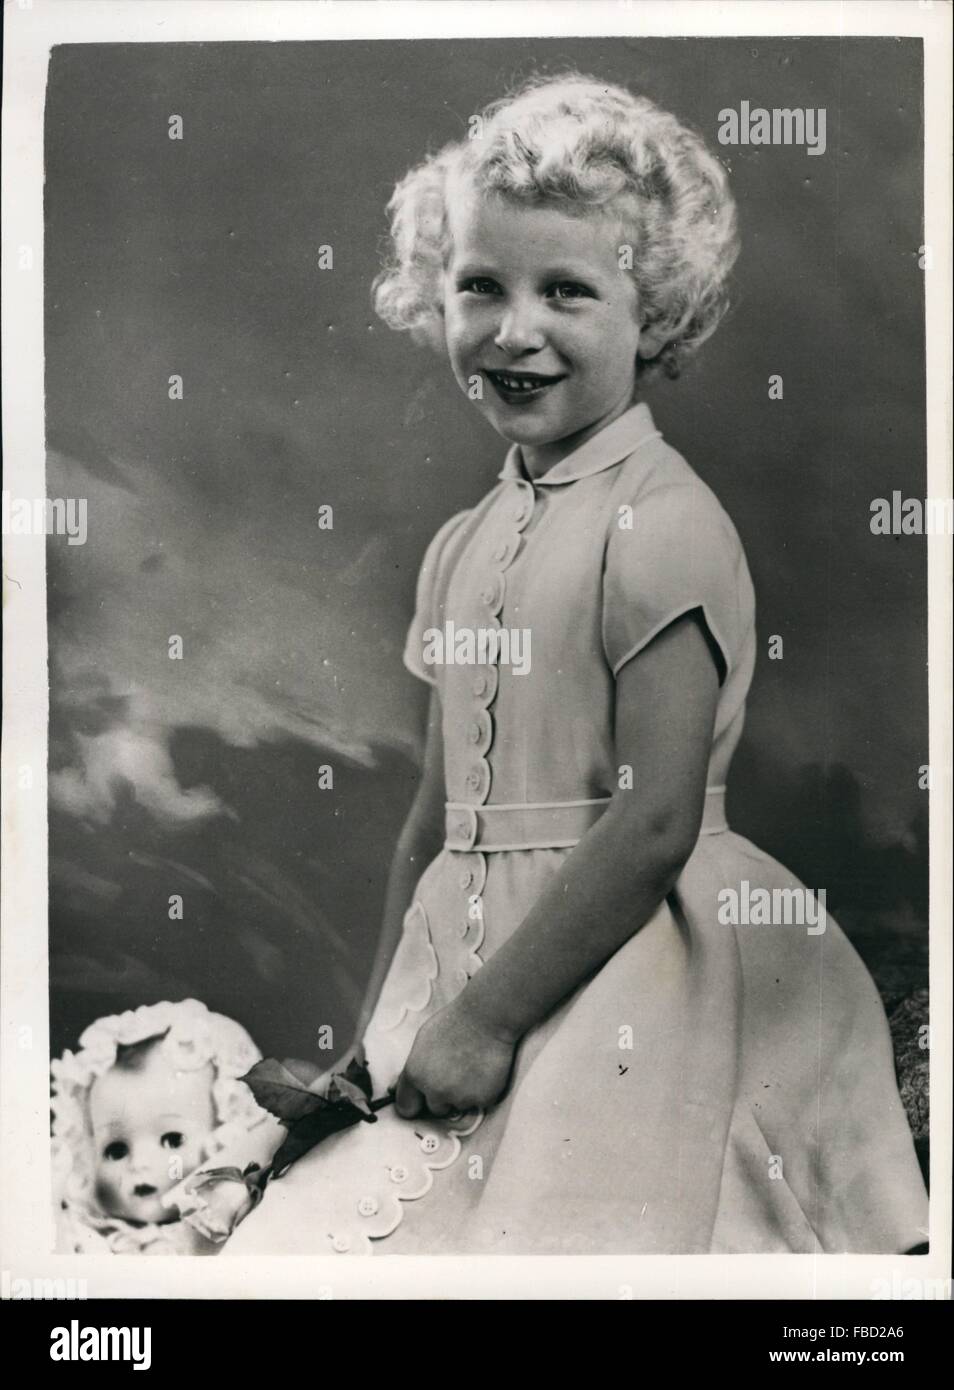 1953-hrh-princess-annes-fifth-birthday-new-portrait-a-new-and-charming-FBD2A6.jpg